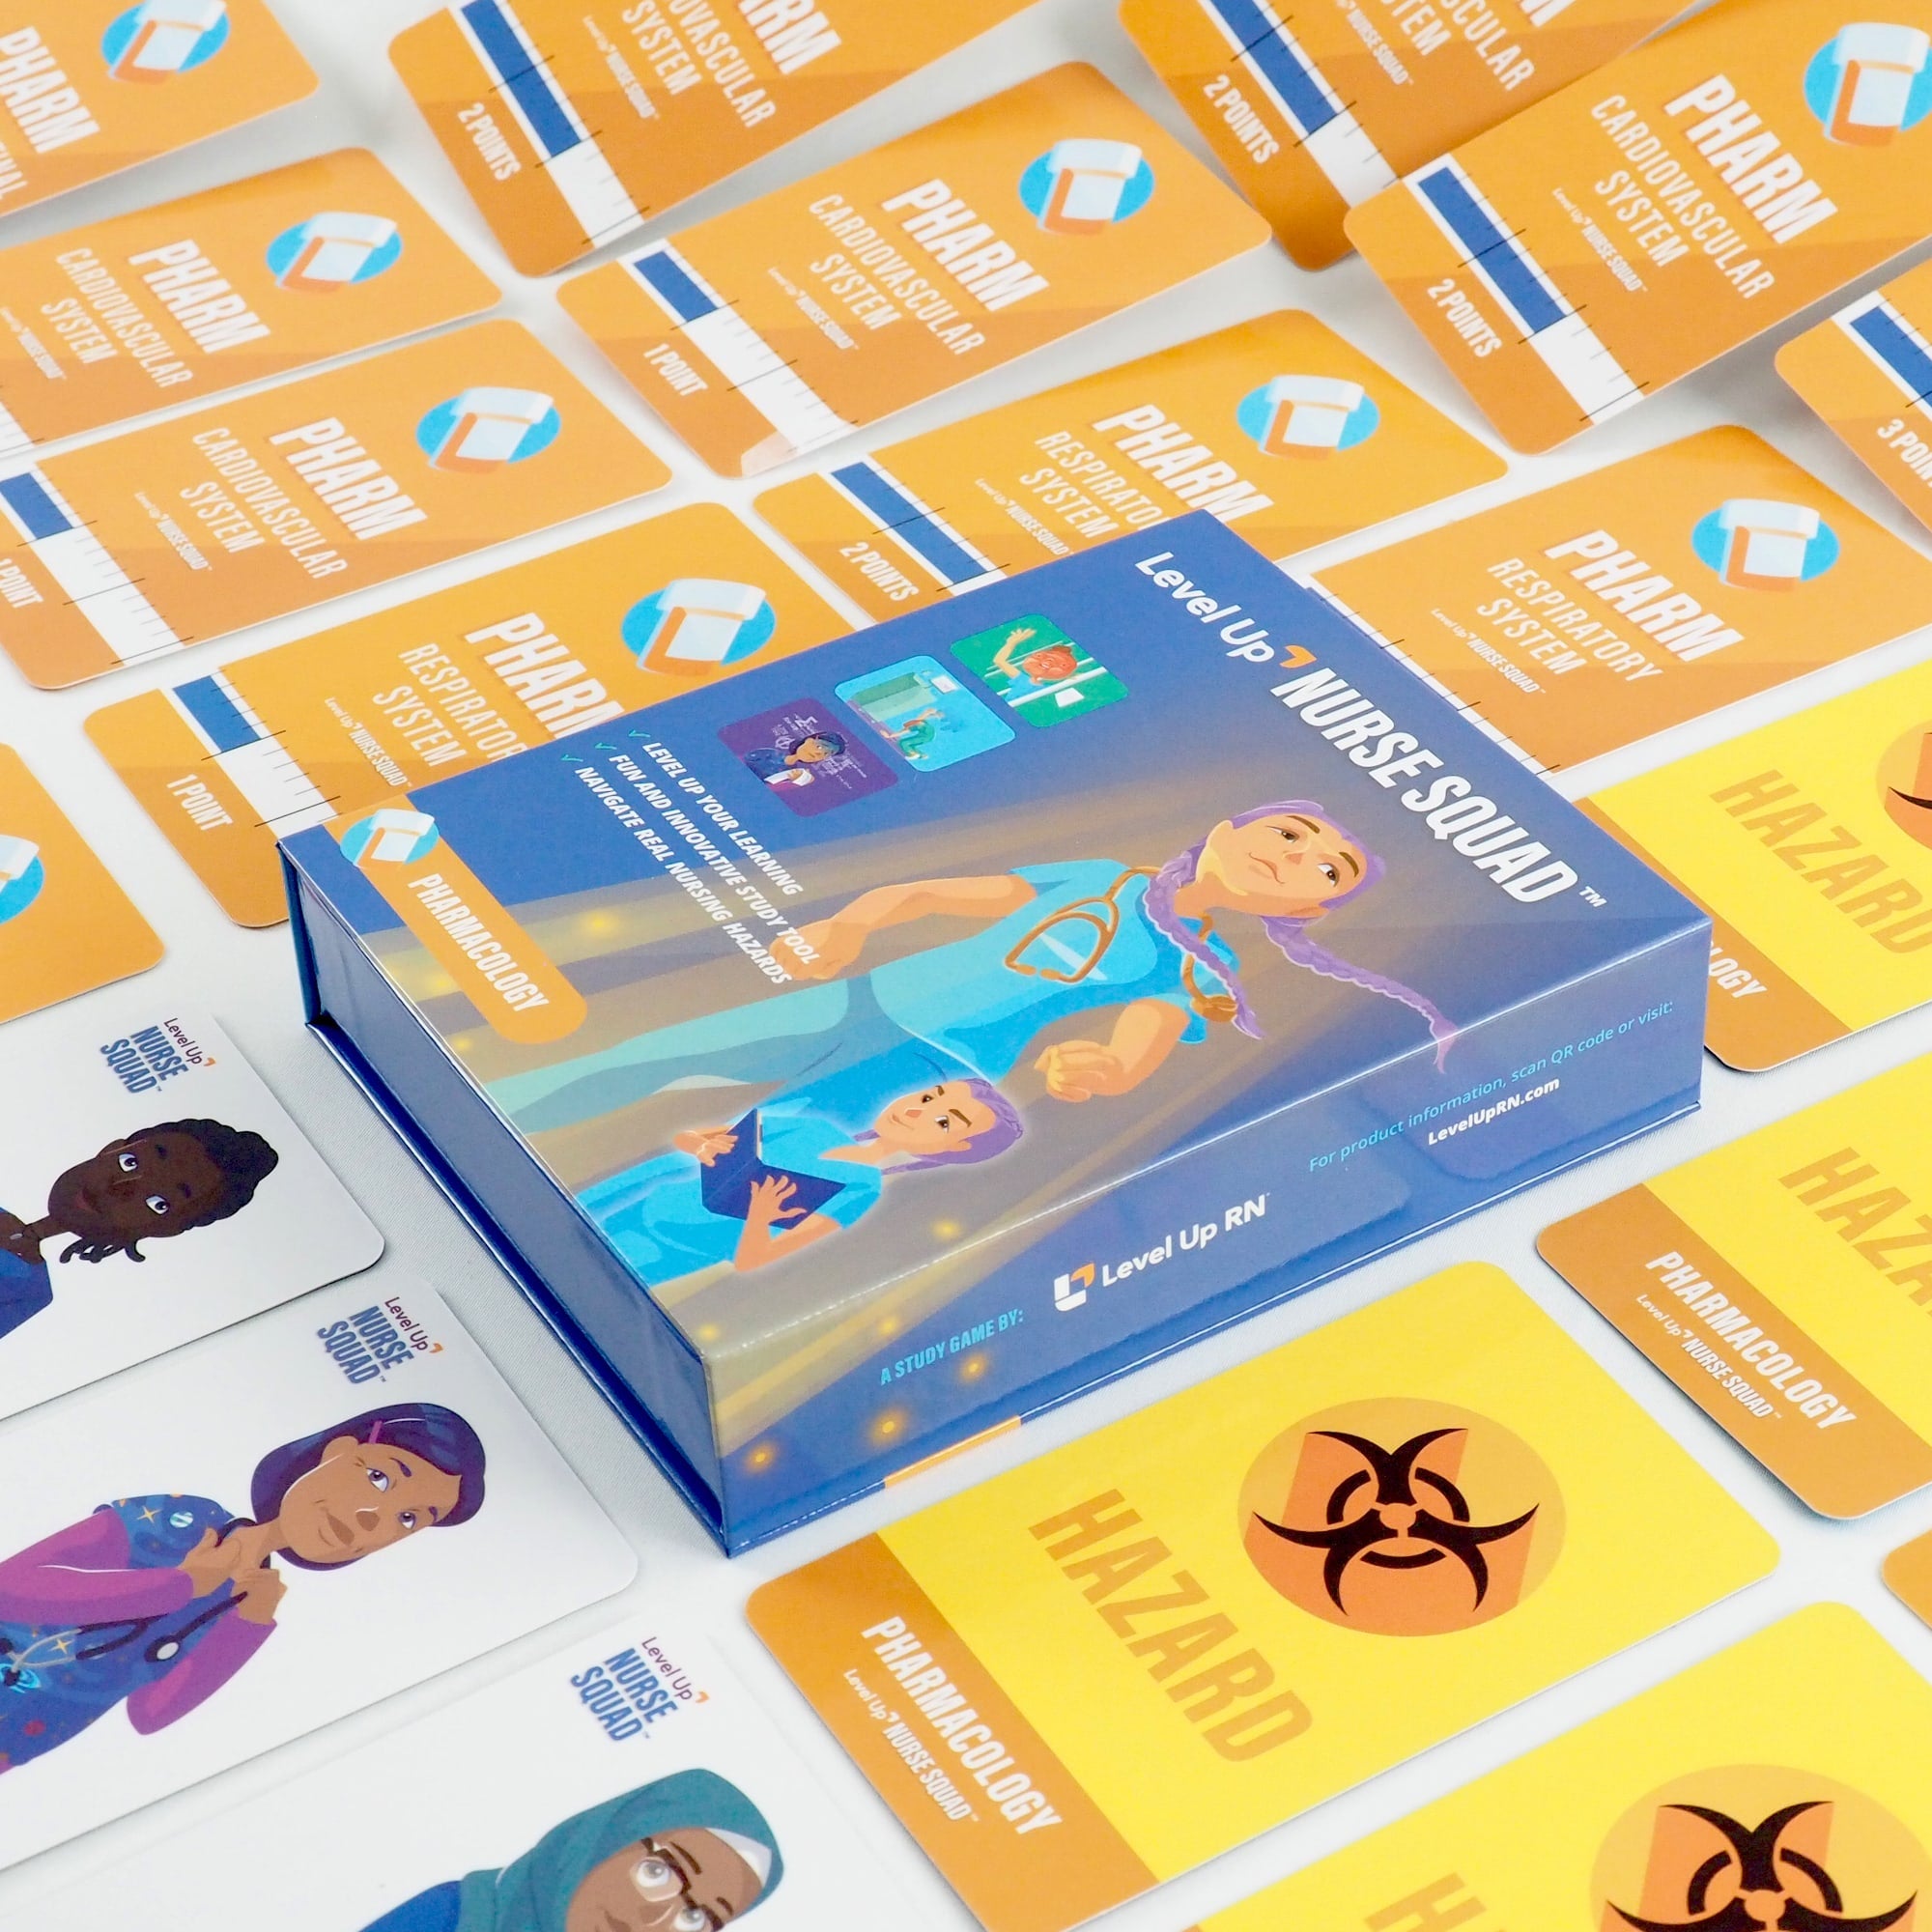 Level Up Nurse Squad - Pharmacology - Card Game from Level Up RN: Pharm-FlatLay